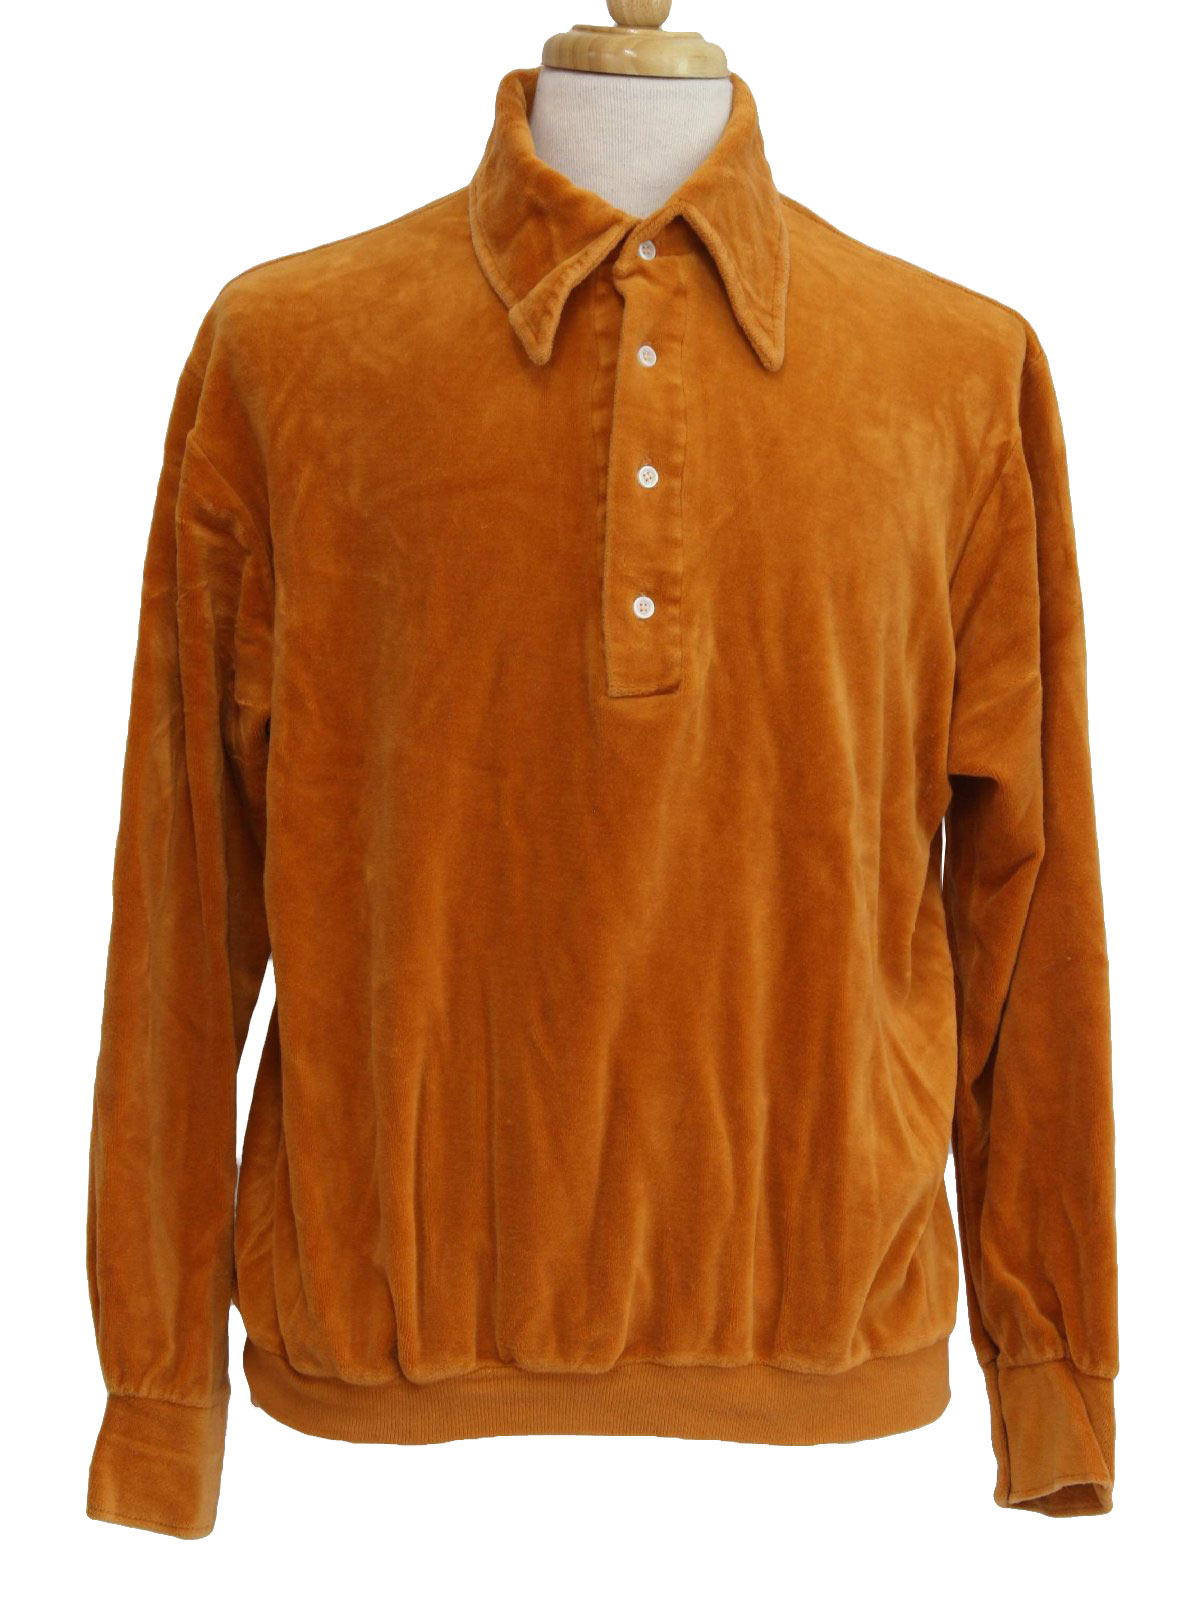 Vintage Macys 70's Velour Shirt: 70s -Macys- Mens orange long sleeve ...